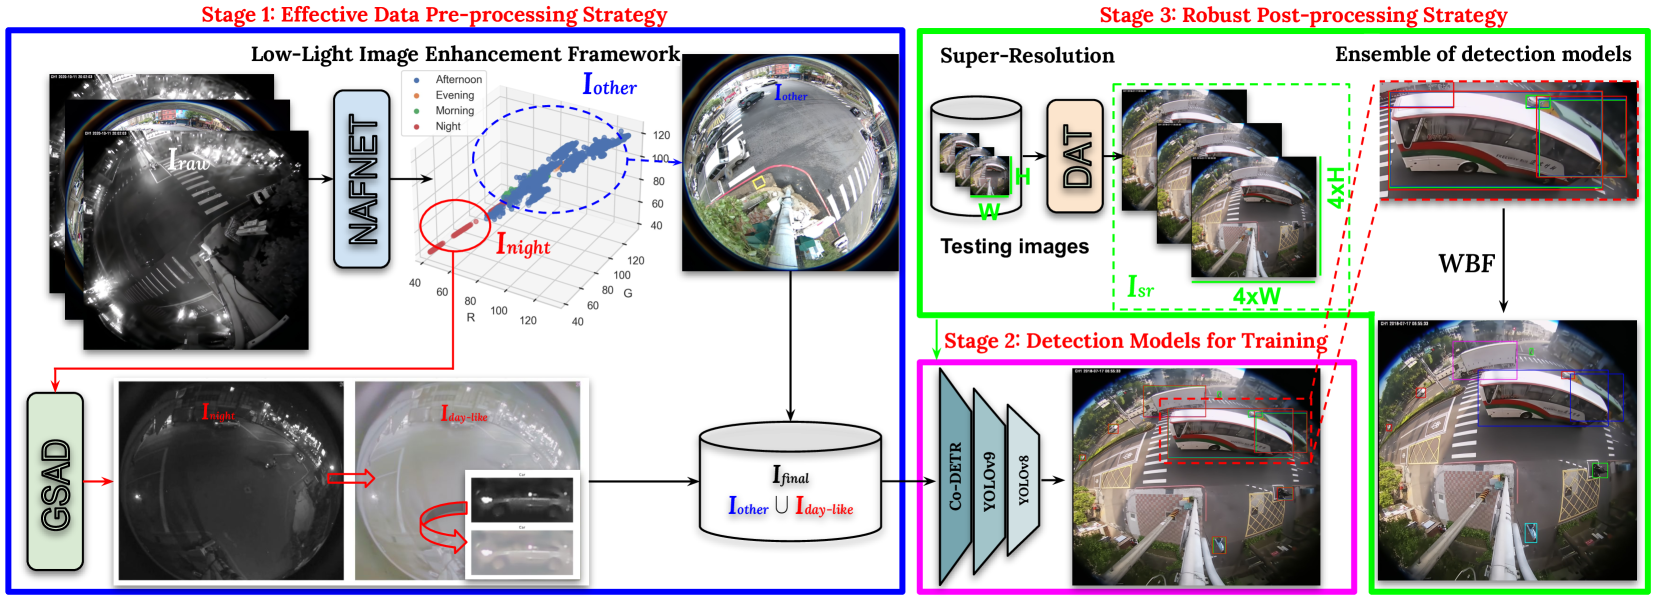 Low-Light Image Enhancement Framework for Improved Object Detection in Fisheye Lens Datasets